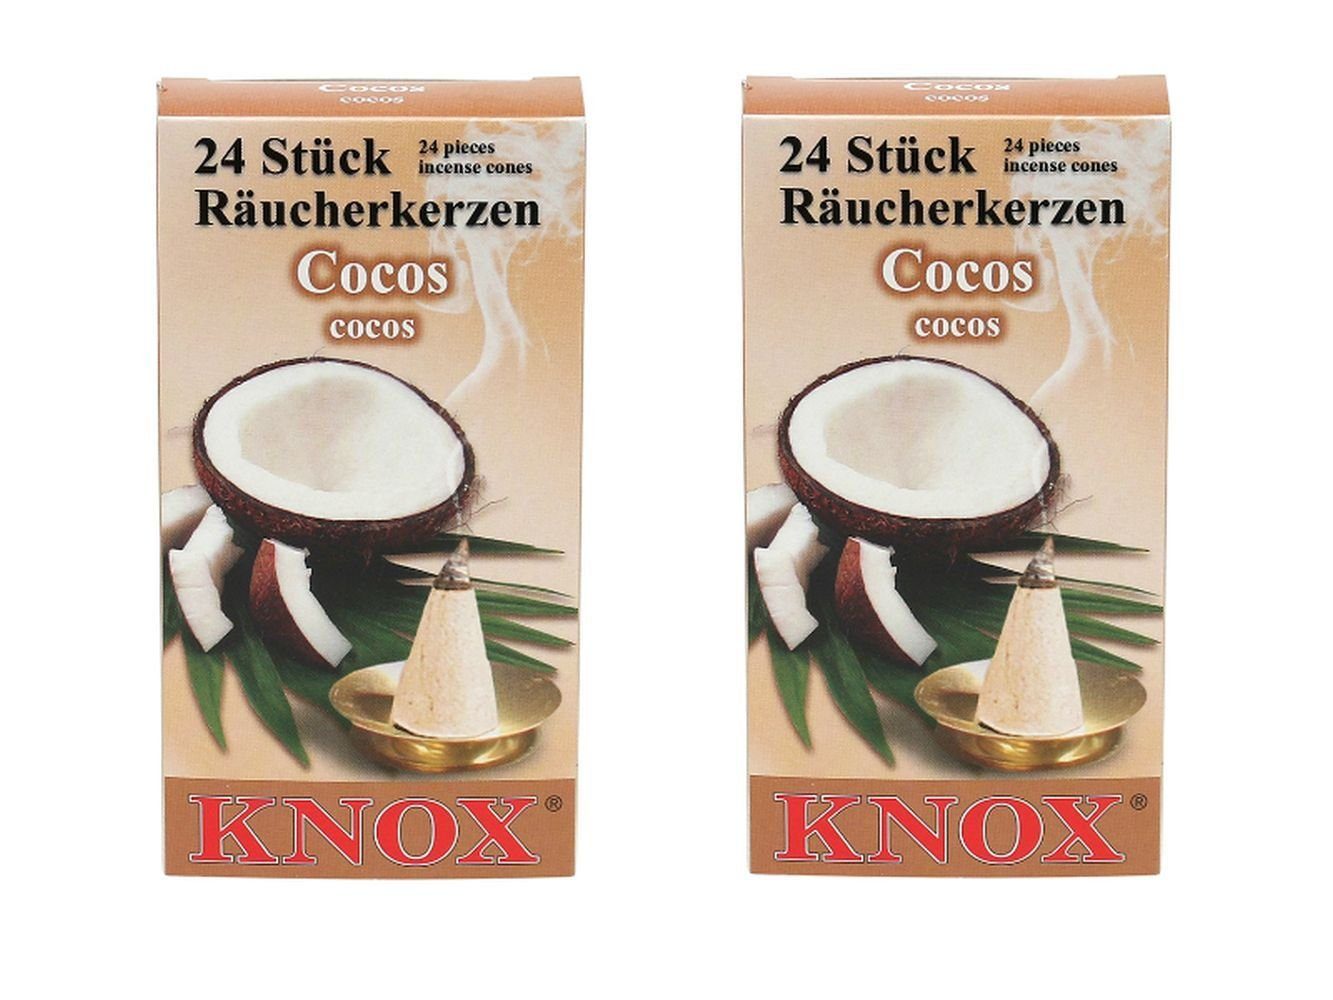 24er Päckchen - Packung KNOX 2 Räuchermännchen Cocos Räucherkerzen-